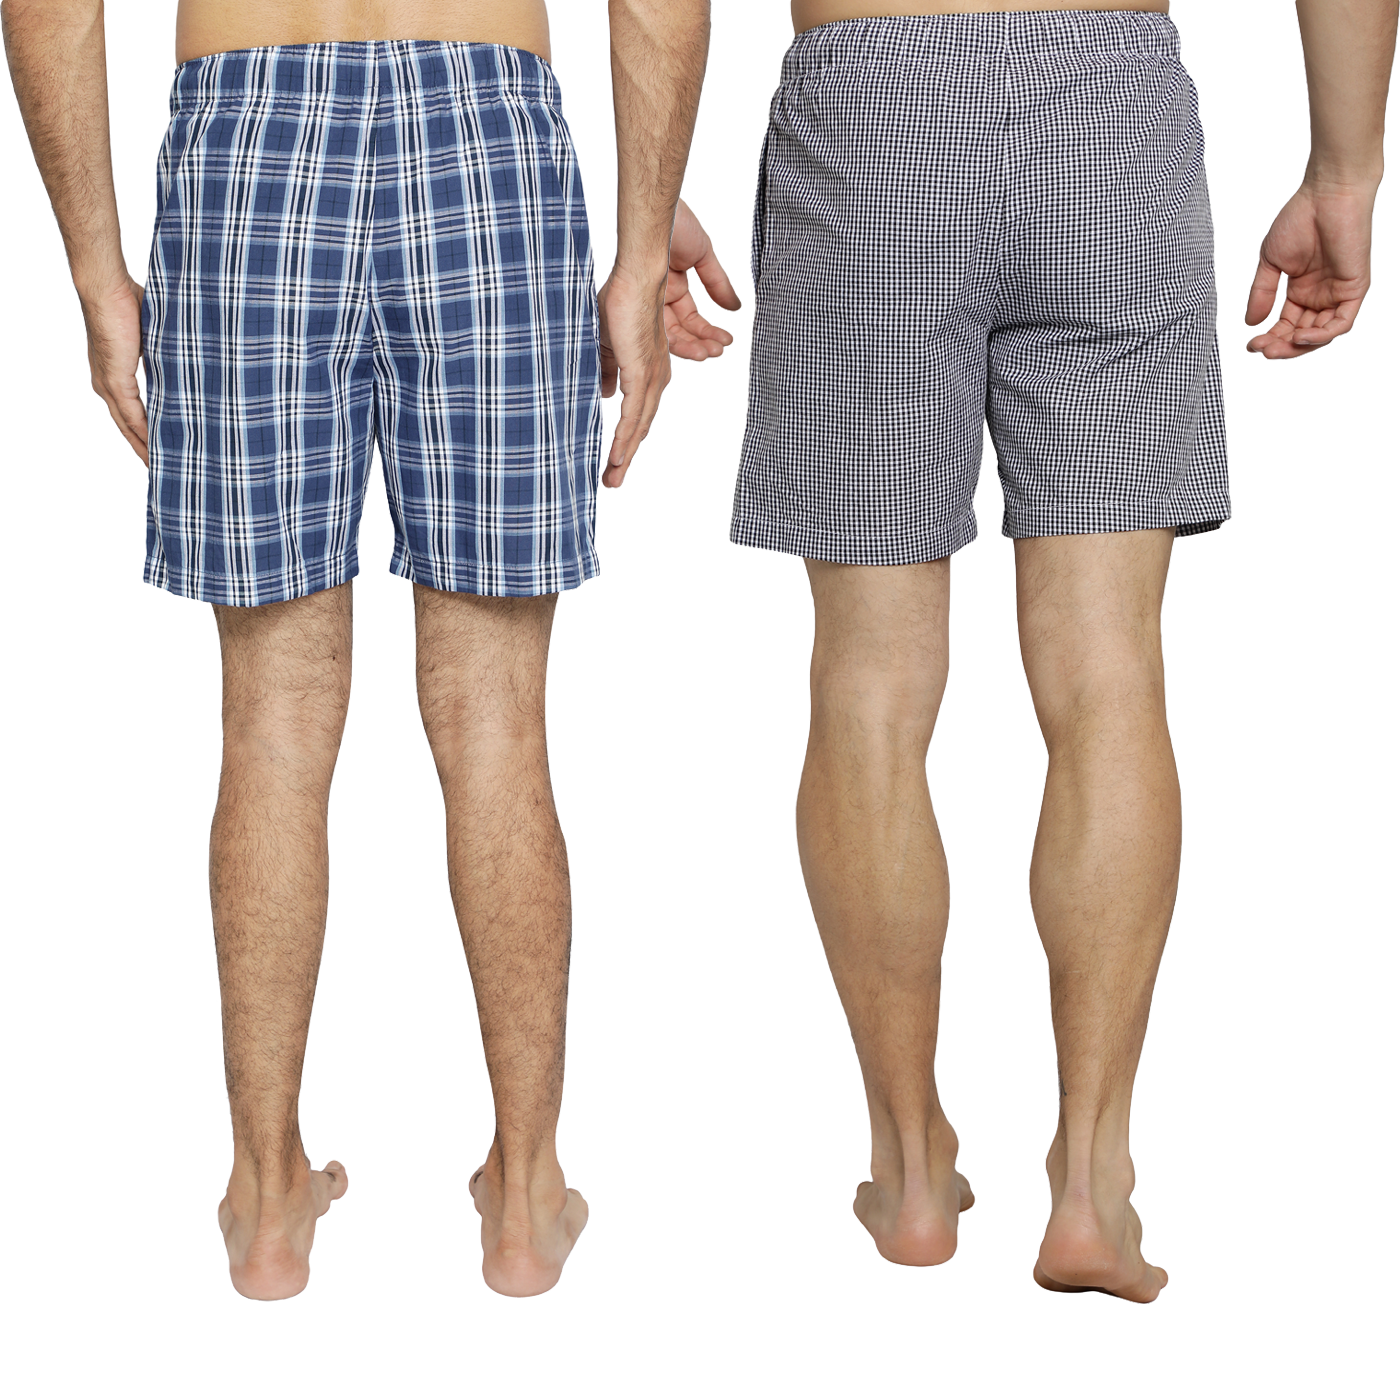 Lounge Shorts for Men-Blue Checks(Pack of 2)